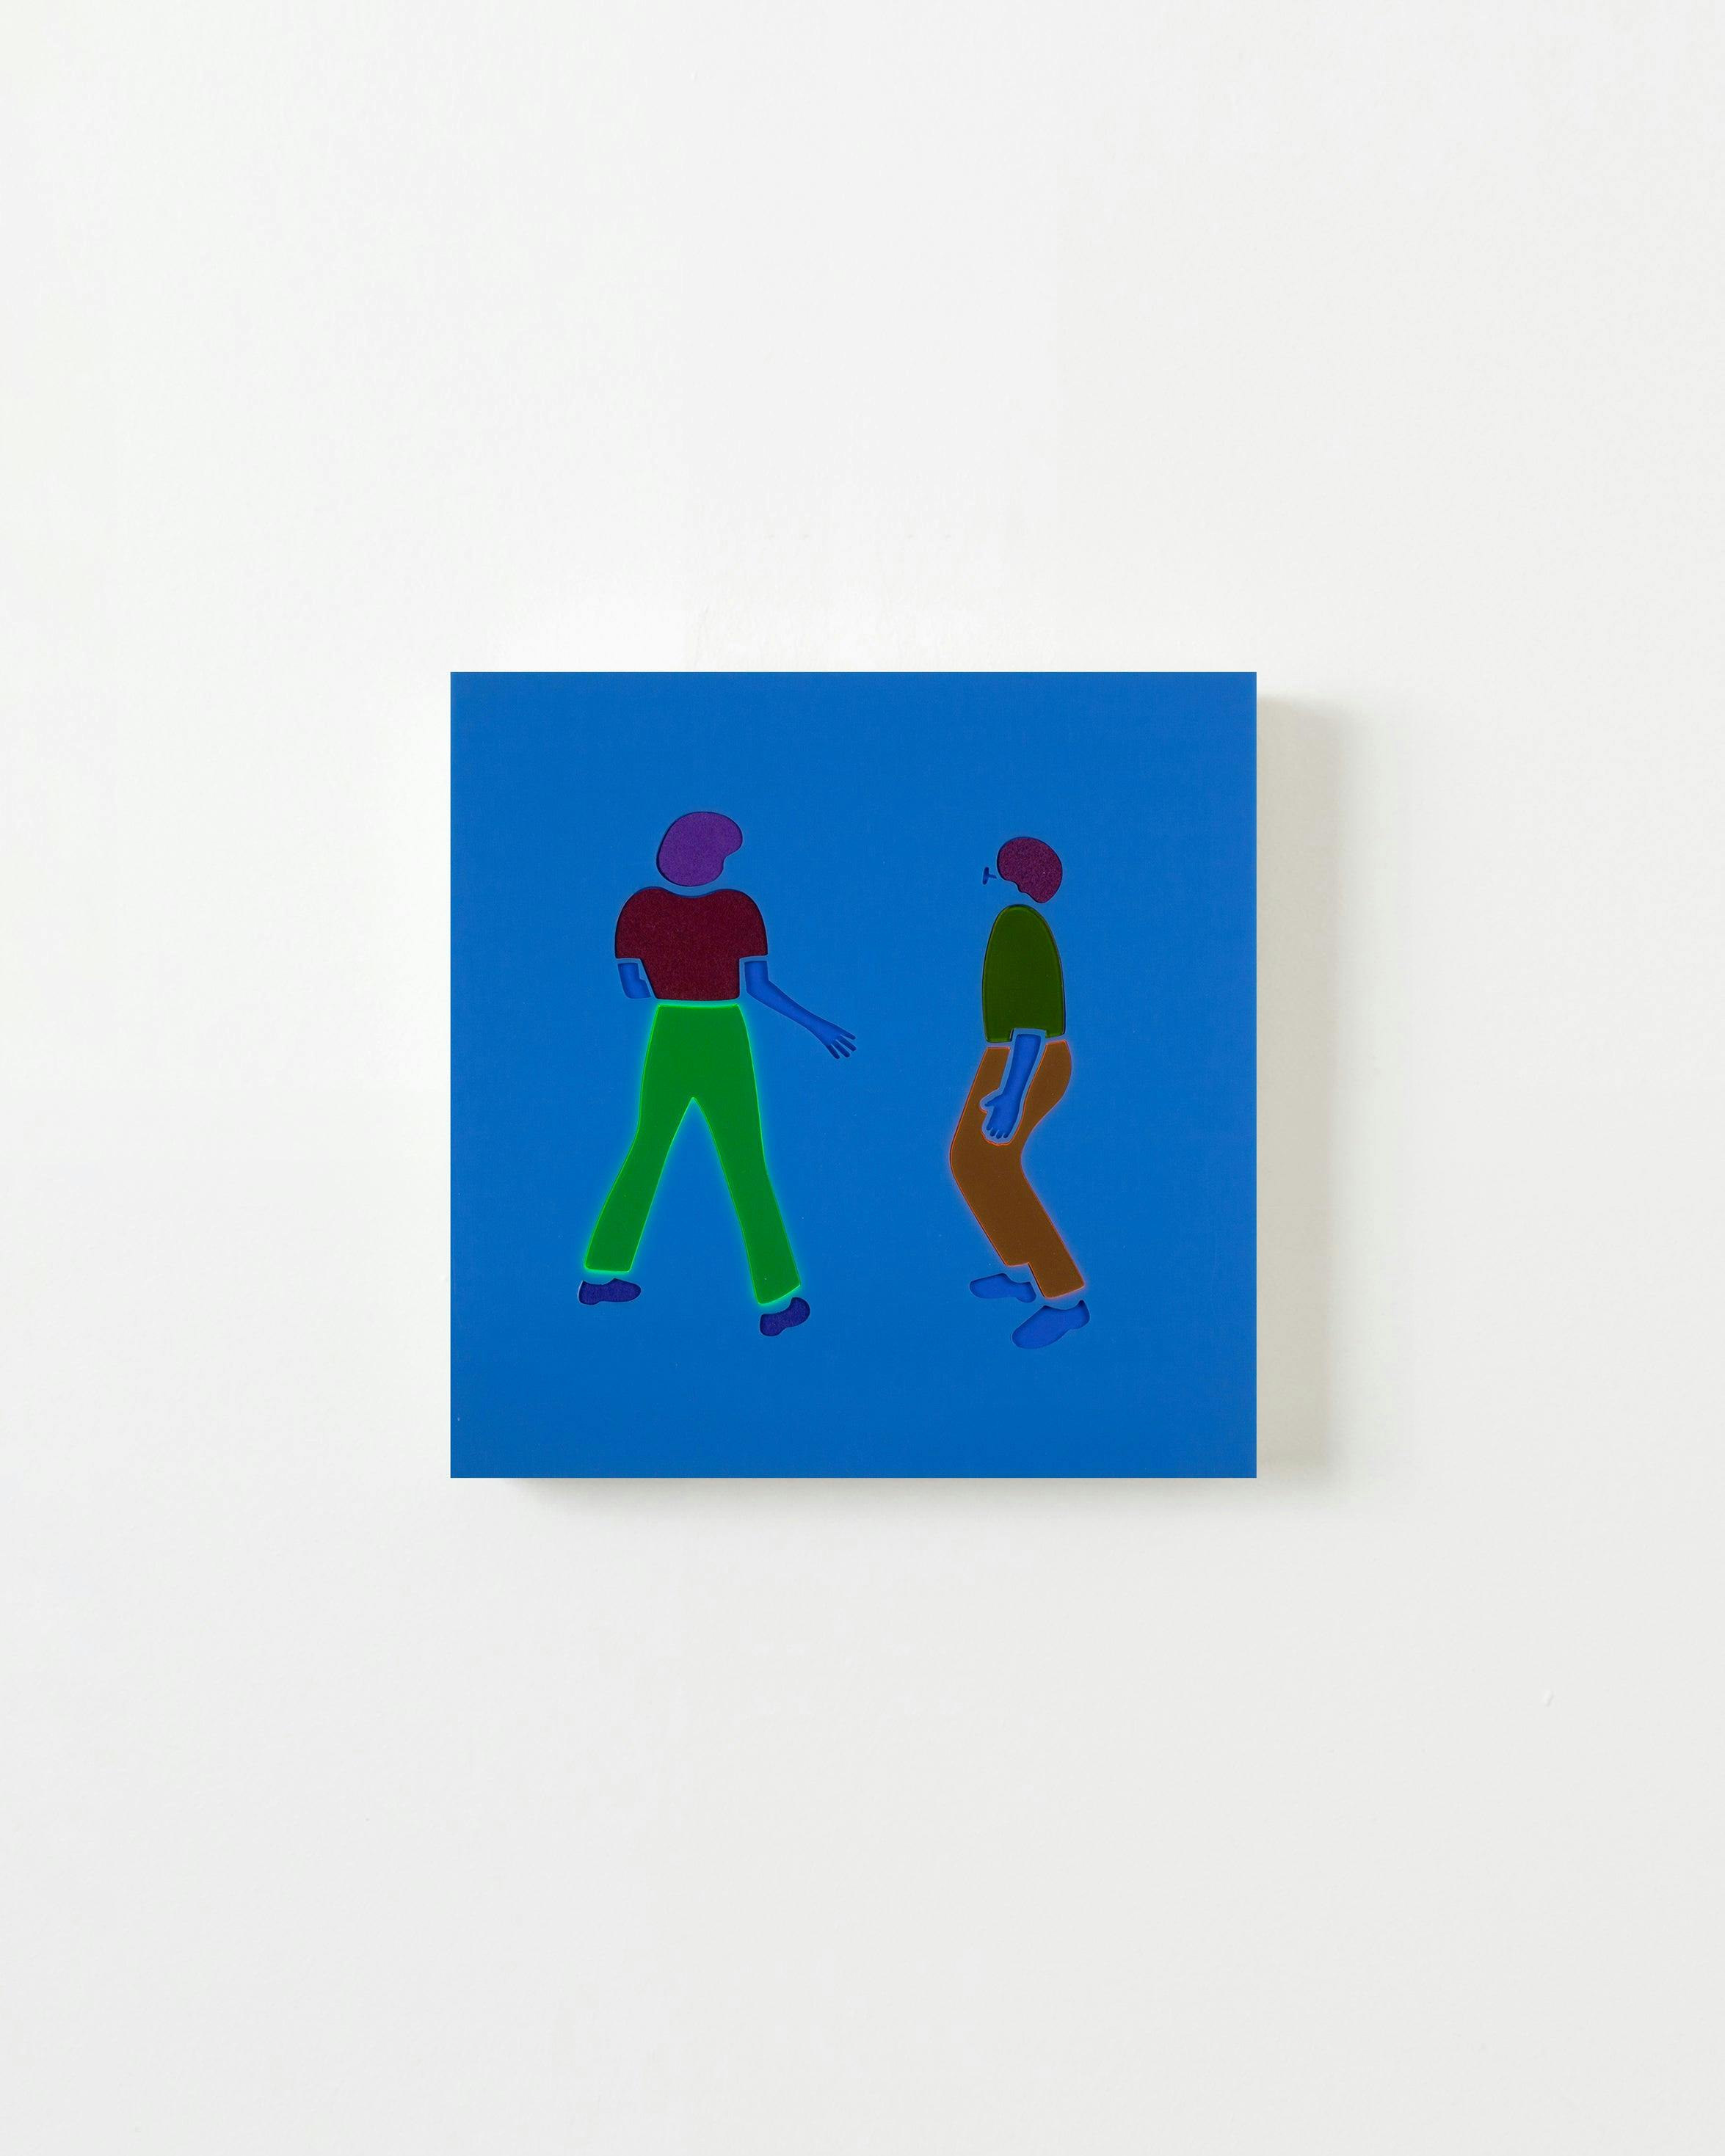 Mixed Media by Dana Bell titled "Awkward Dance (blue, orange and green)".